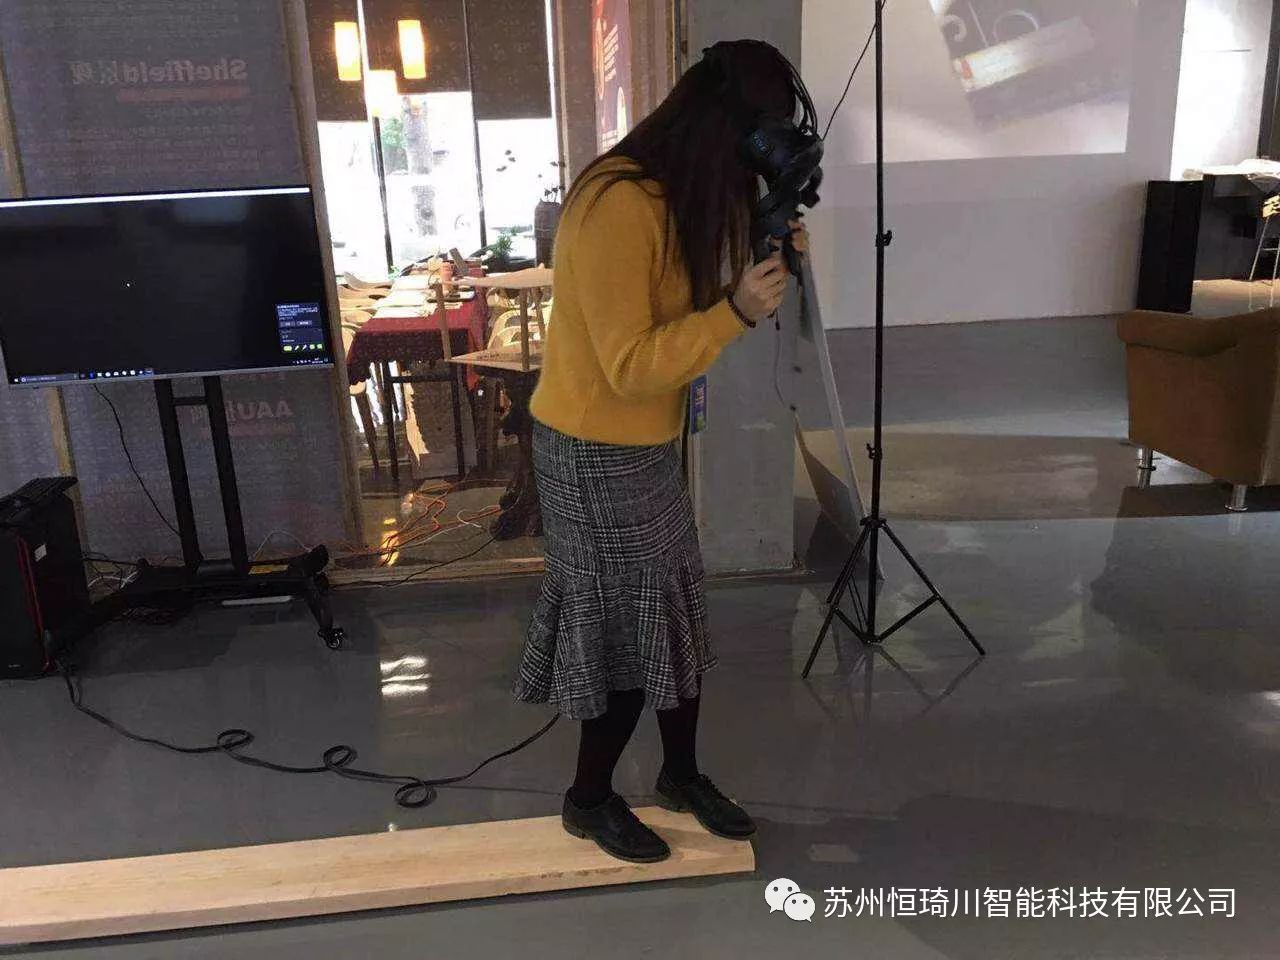 VR高空救猫 VR高空行走租赁 VR高空跳楼庆典道具设备出租 互动暖场VR虚拟现实设备租赁